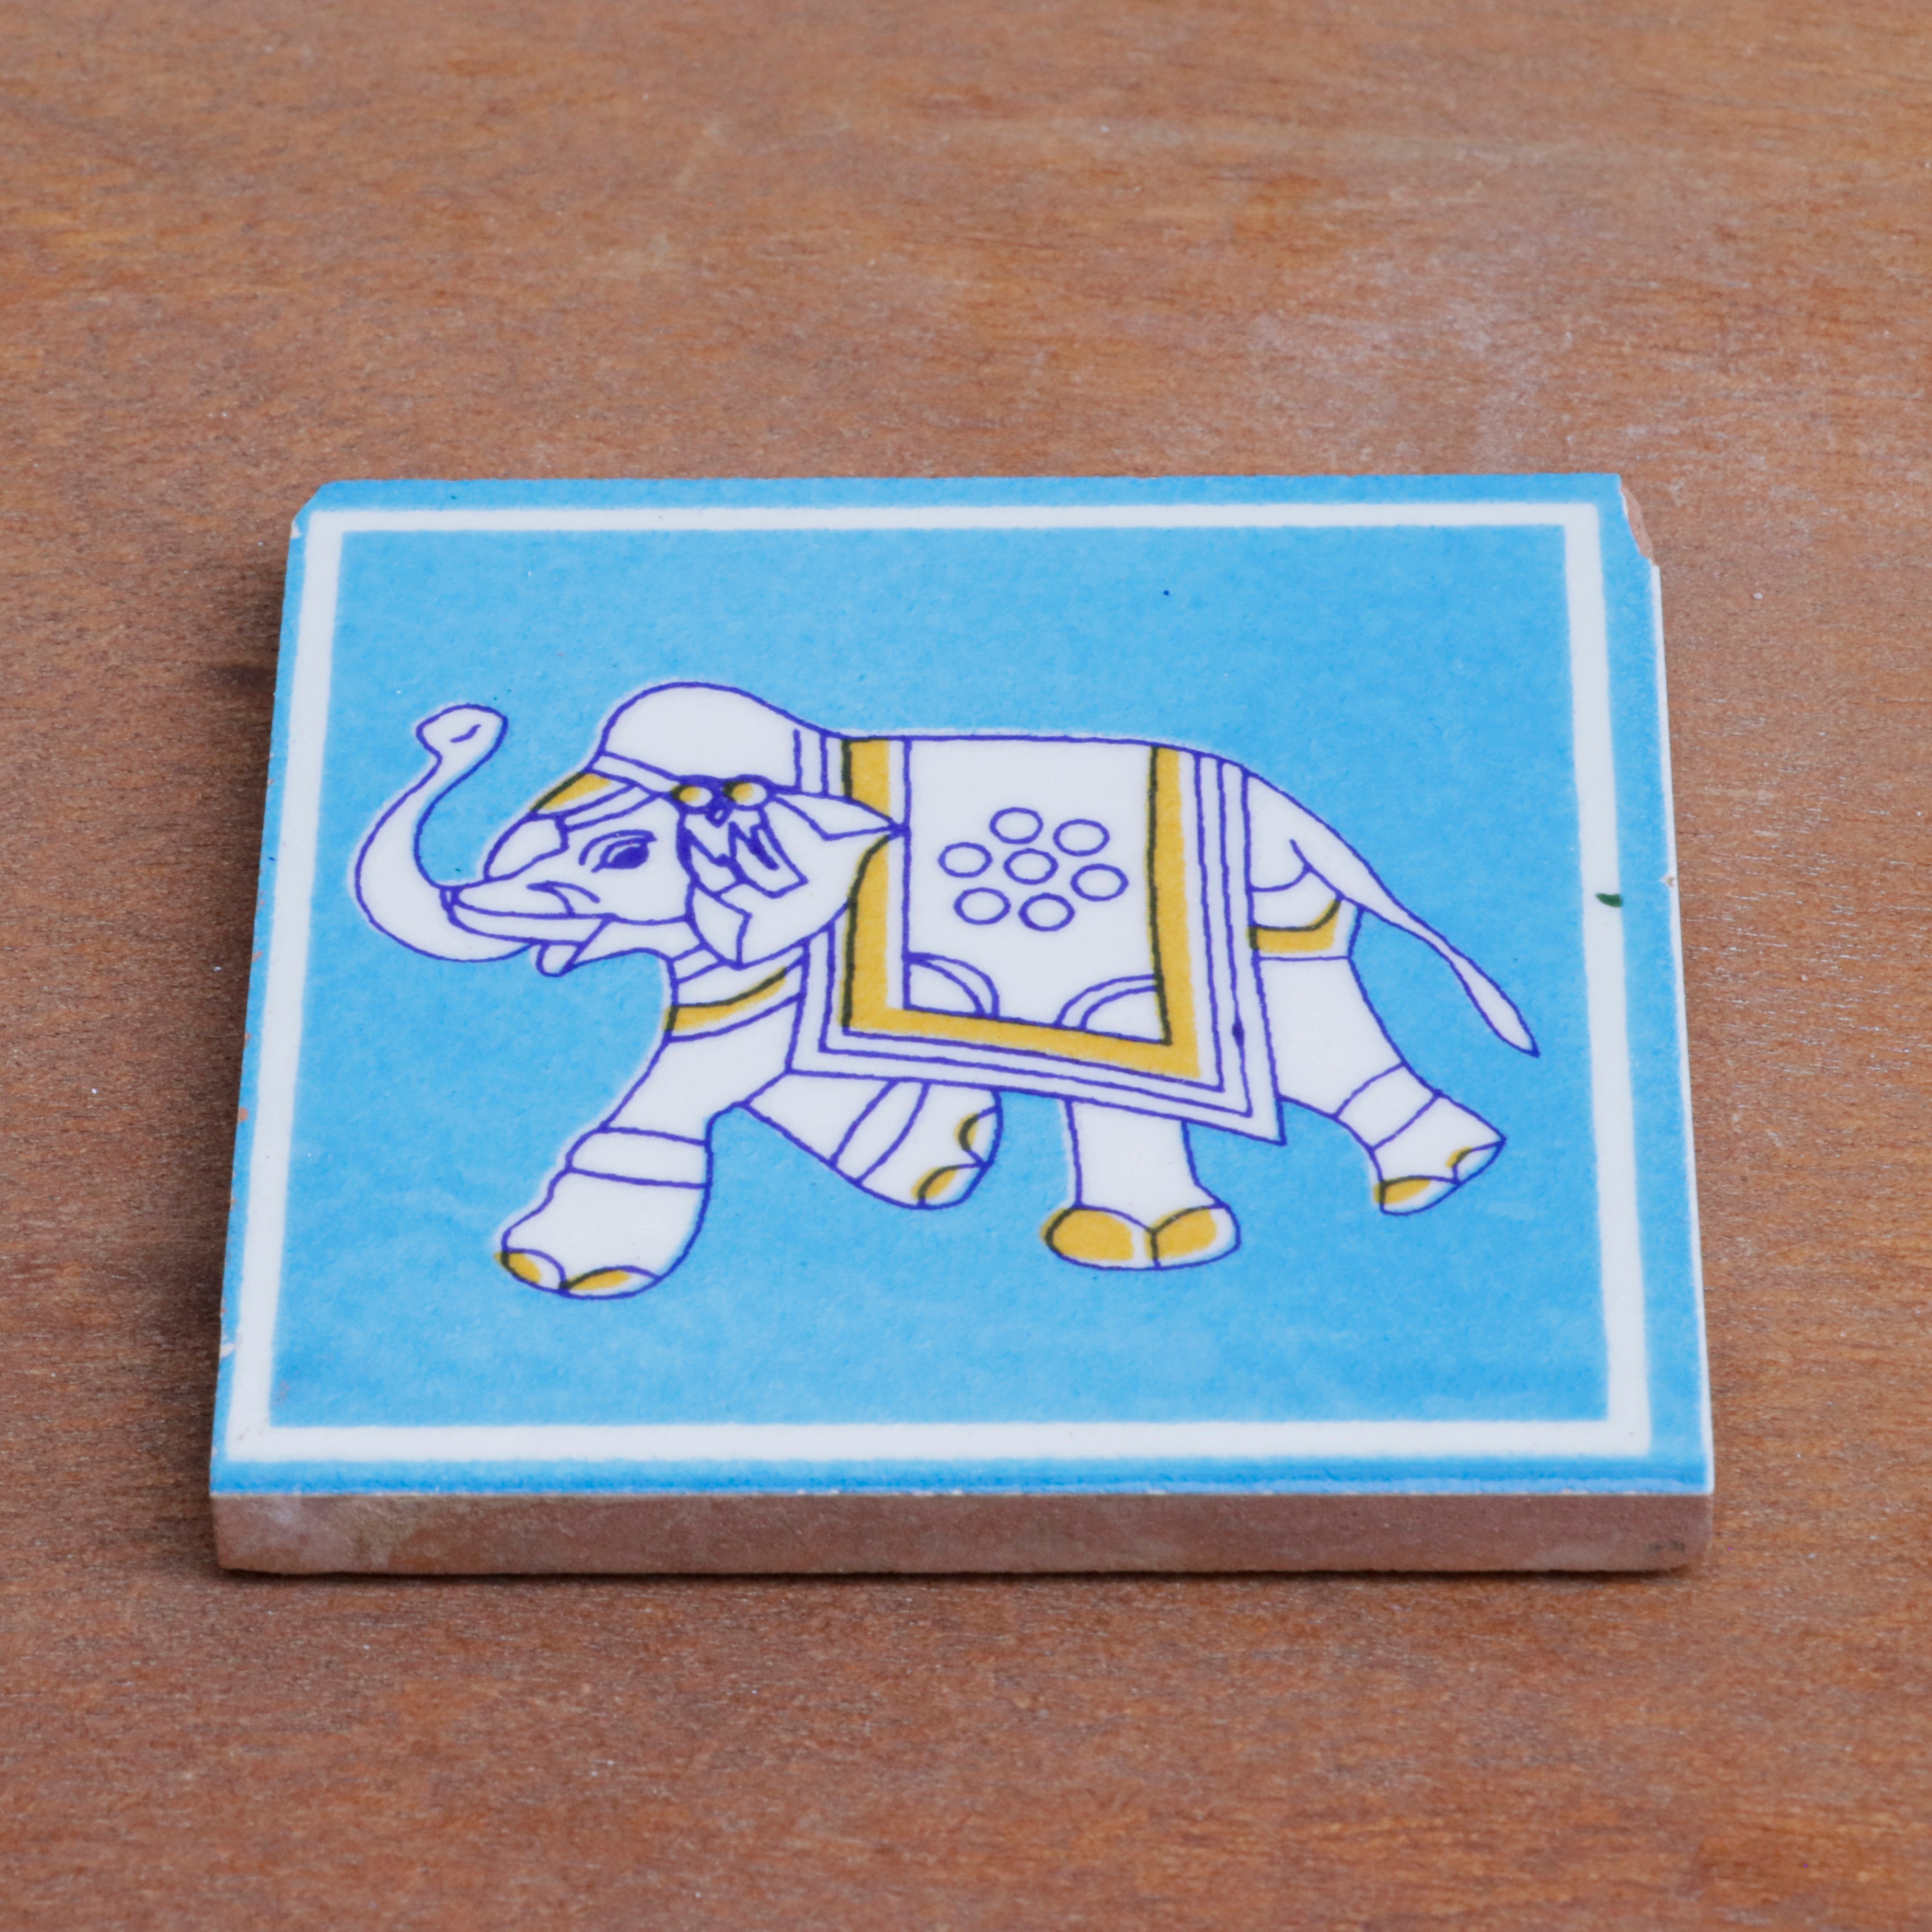 Antique Montage Elephant Designed Ceramic Square Tile Set of 2 Ceramic Tile